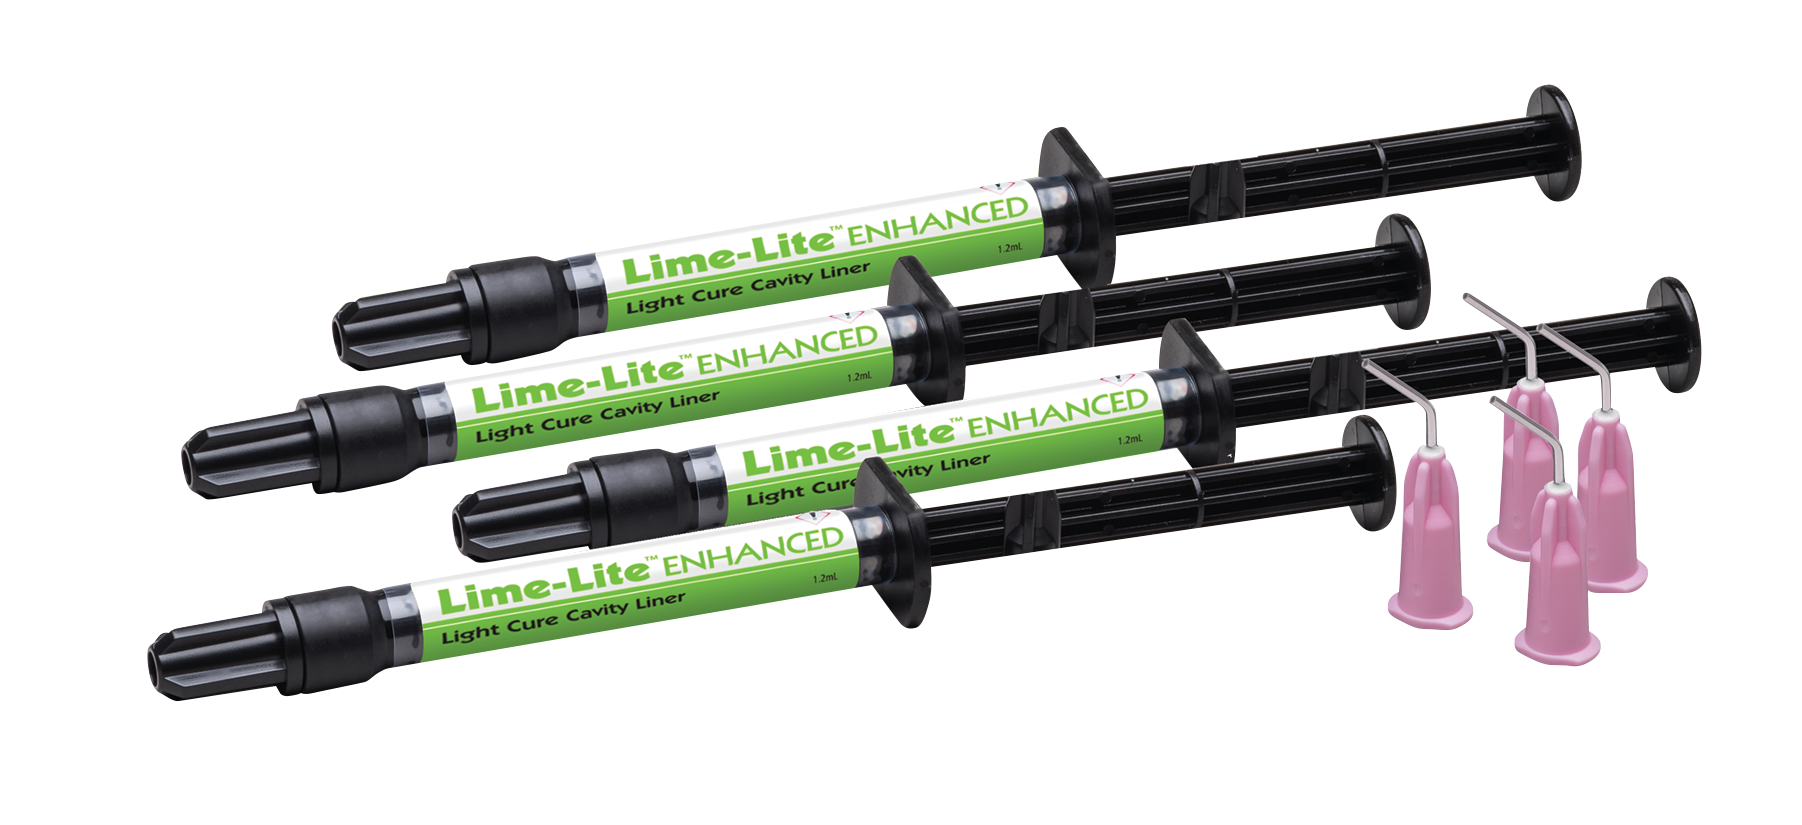 Pulpdent Lime-Lite Enhanced Cavity Liner Kit